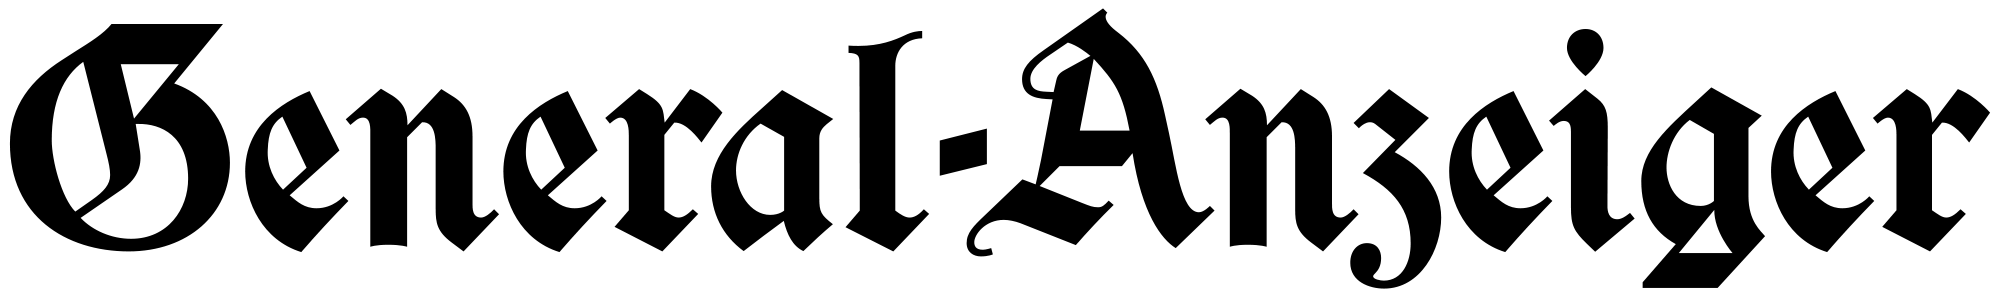 2000px-General-Anzeiger_(Bonn)_logo.svg.png